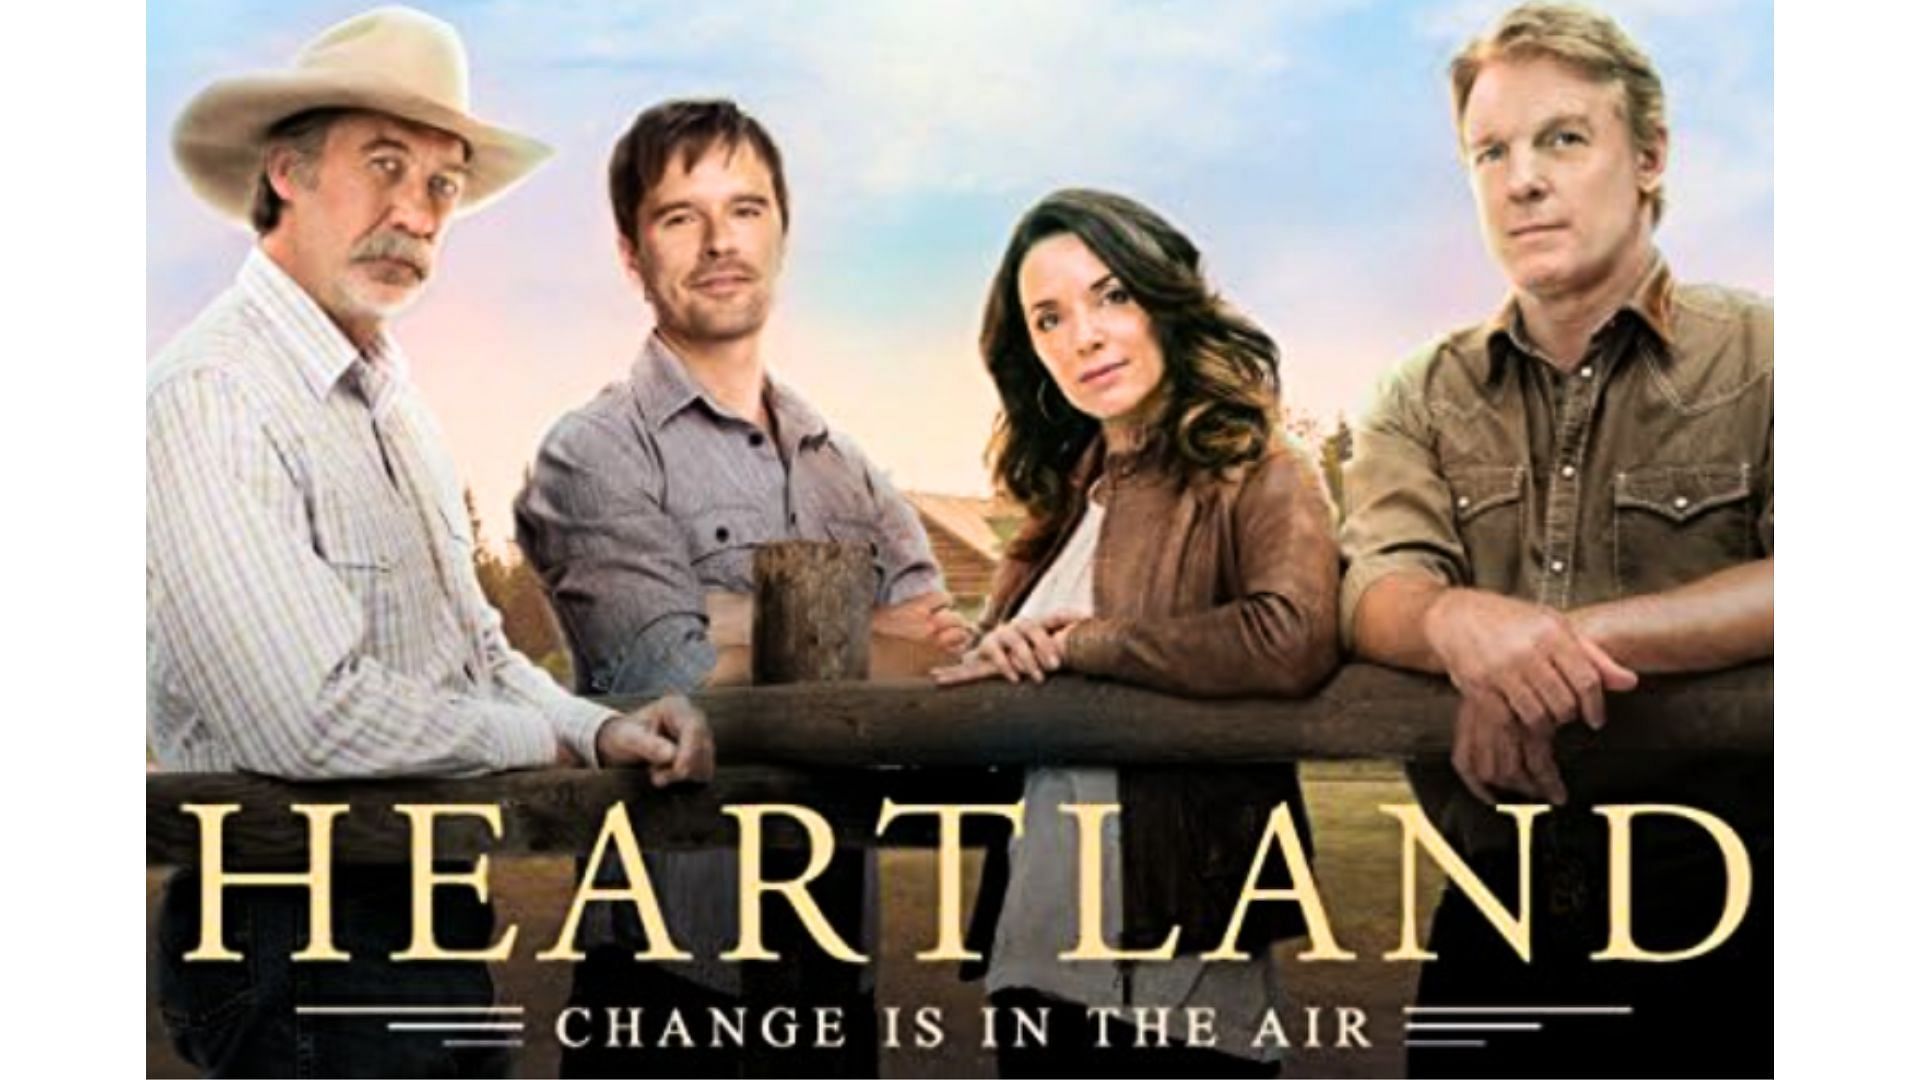 There will be no Heartland season 17 episode 11 (Image via IMDb)